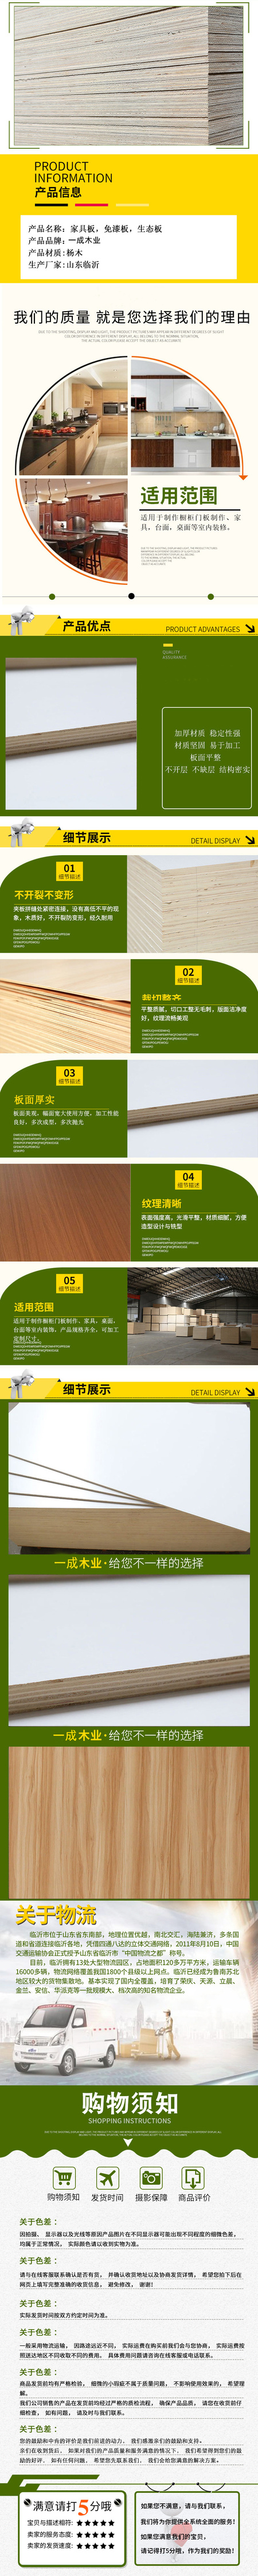 e0级杉木生态板 一成家居生态板国内一线品牌 中国品牌十大生态板